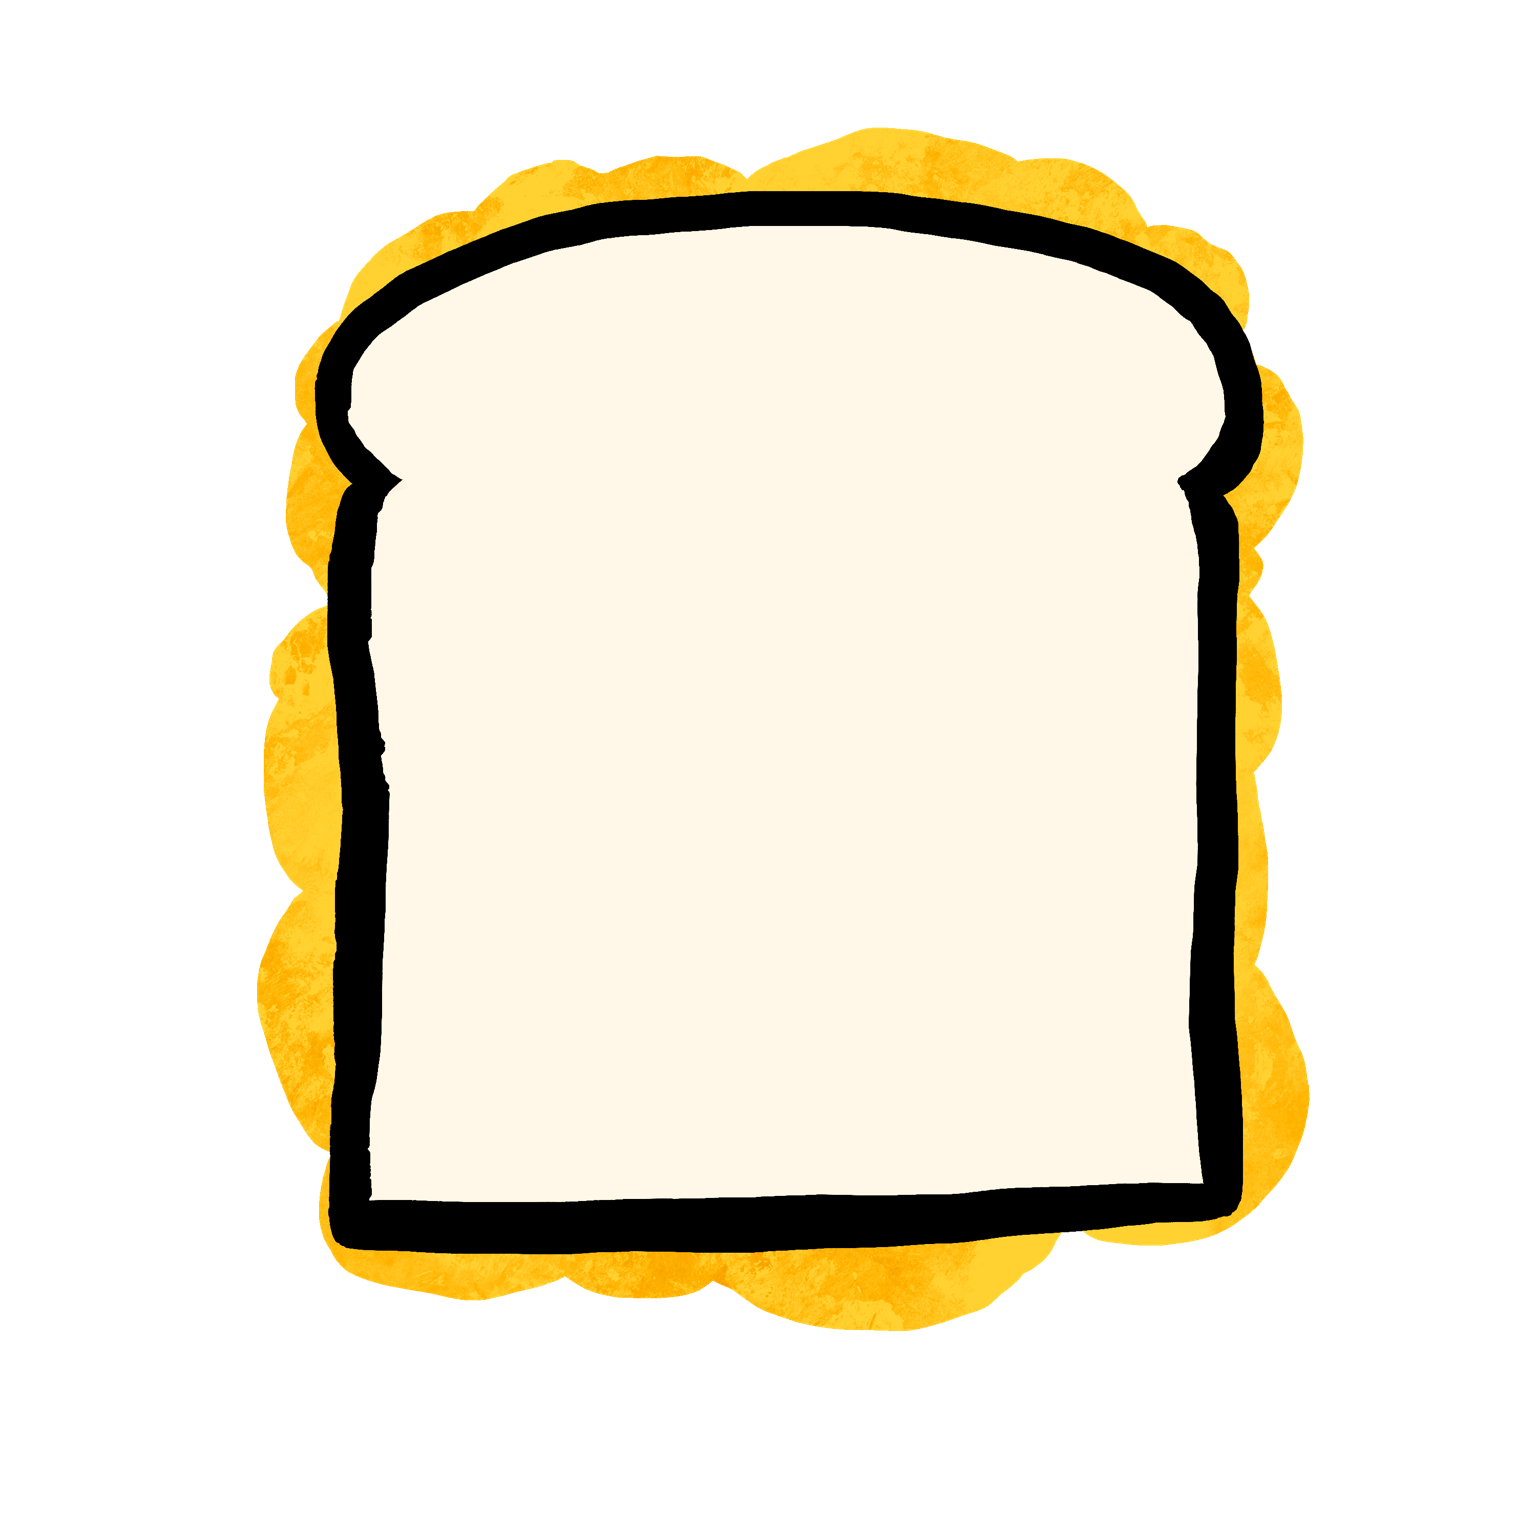 Overhead view of white bread crisp sandwich